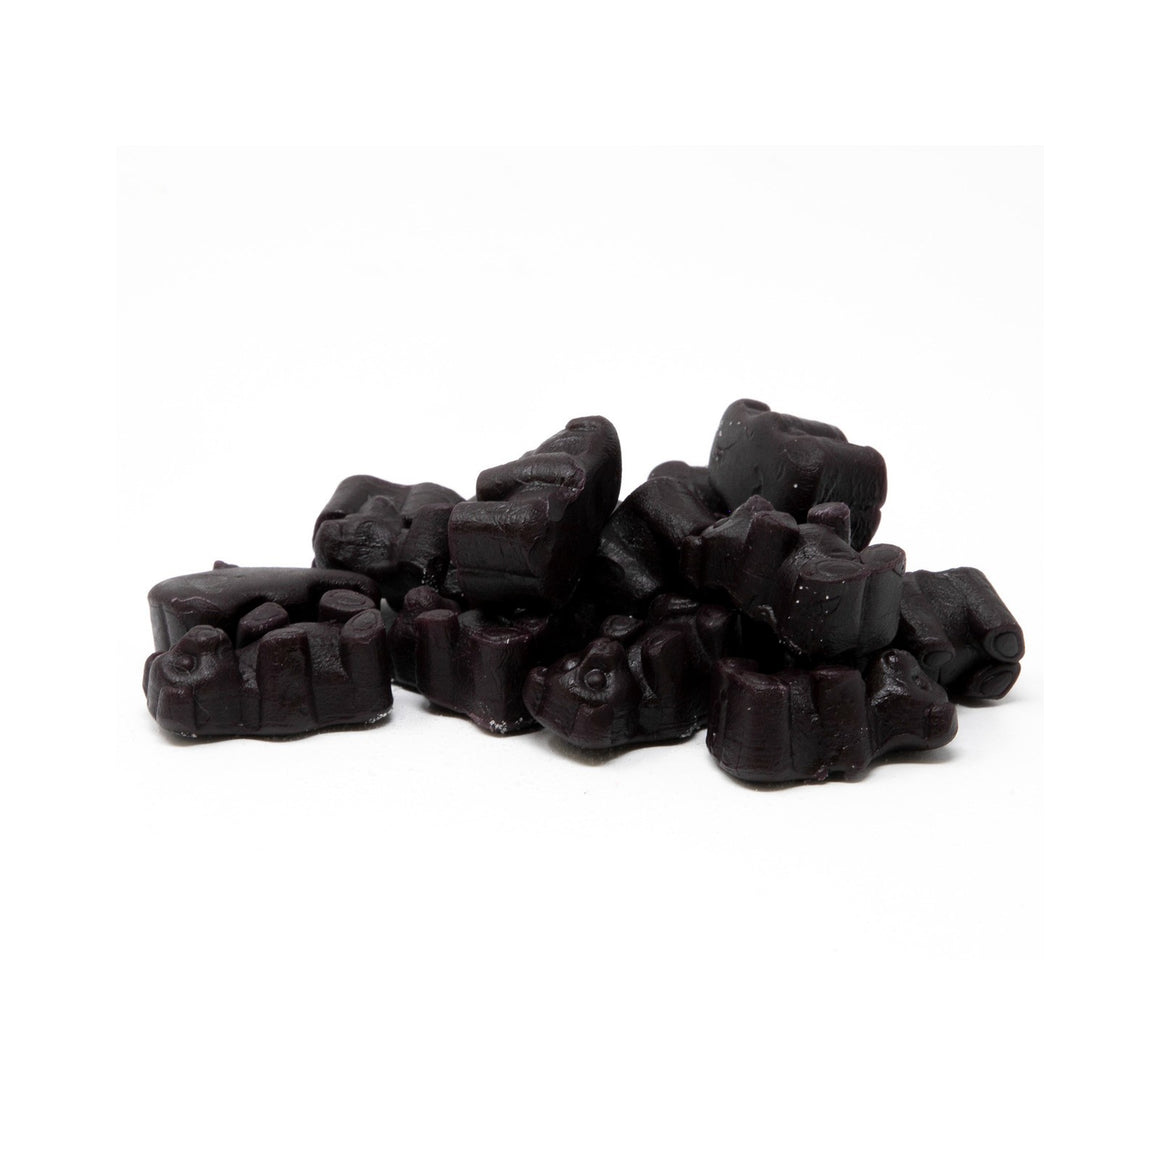 All City Candy Black Licorice Juju Gummi Bears 3 lb. Bag Gummi Zachary For fresh candy and great service, visit www.allcitycandy.com